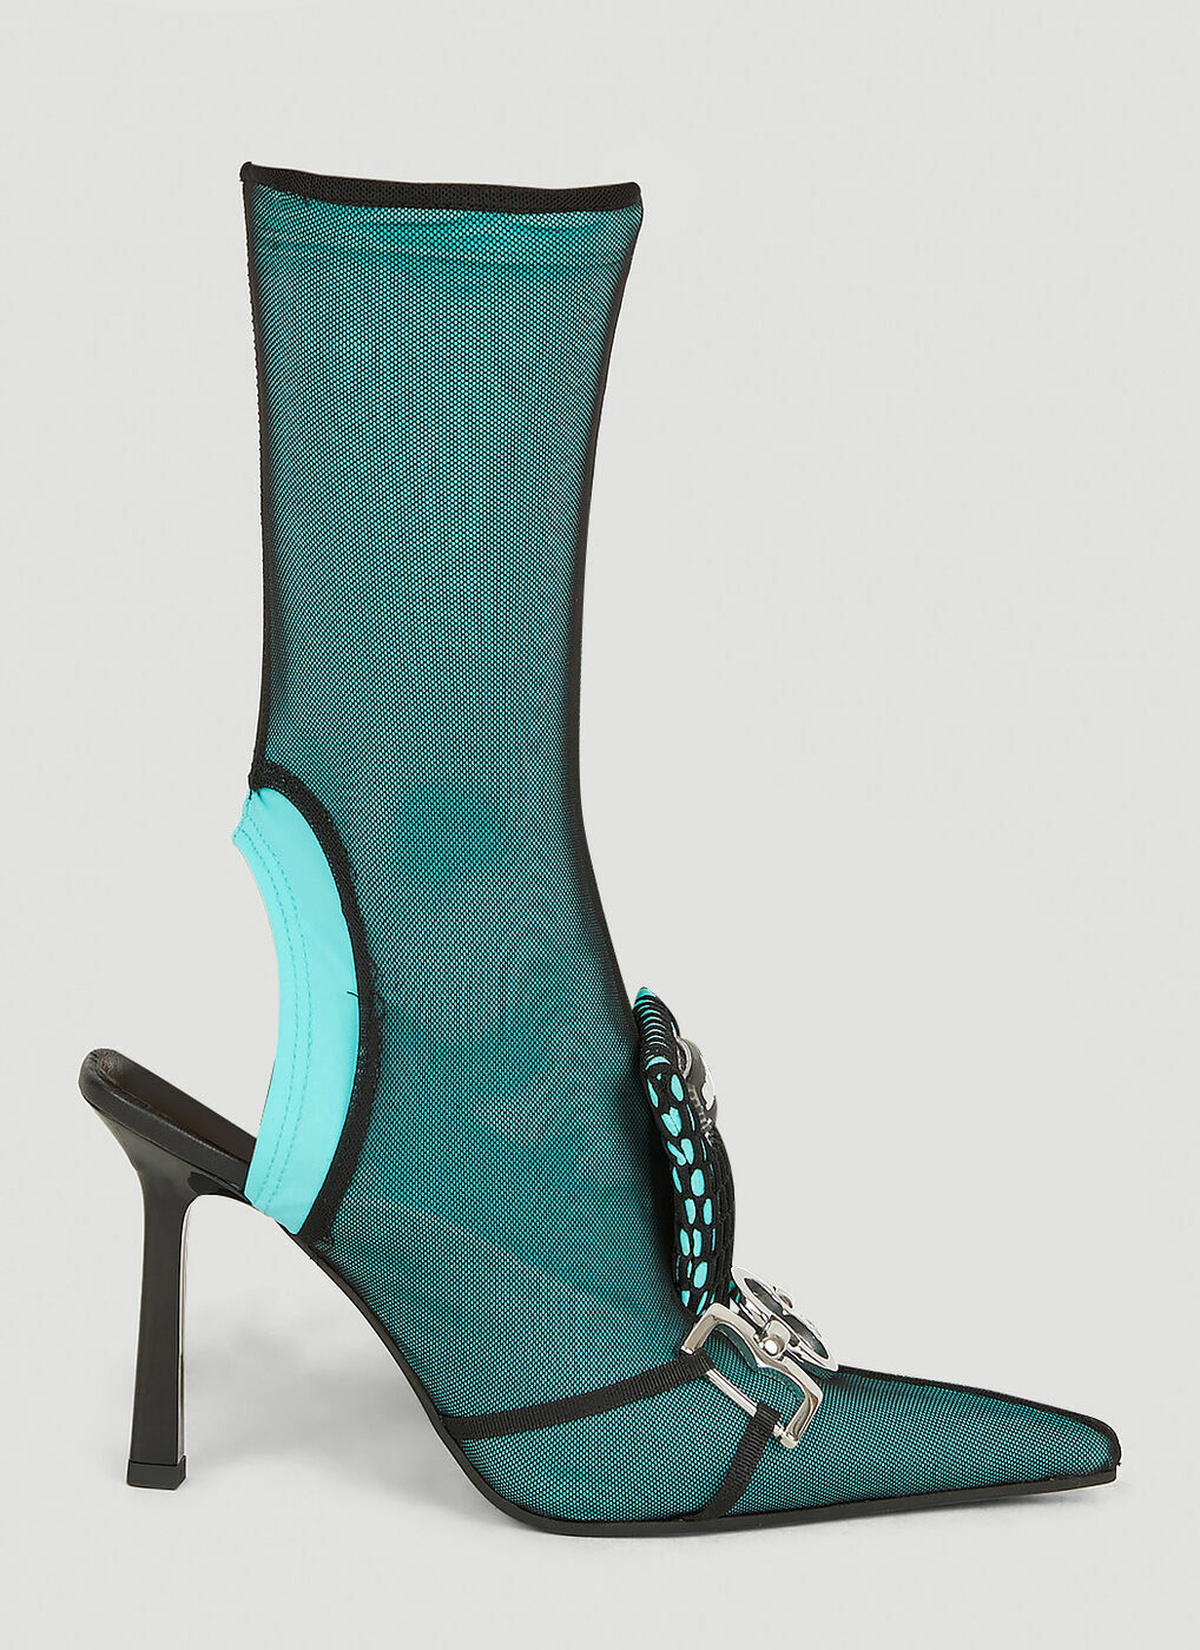 Lima Sock High Heel Boots in Blue Ancuta Sarca